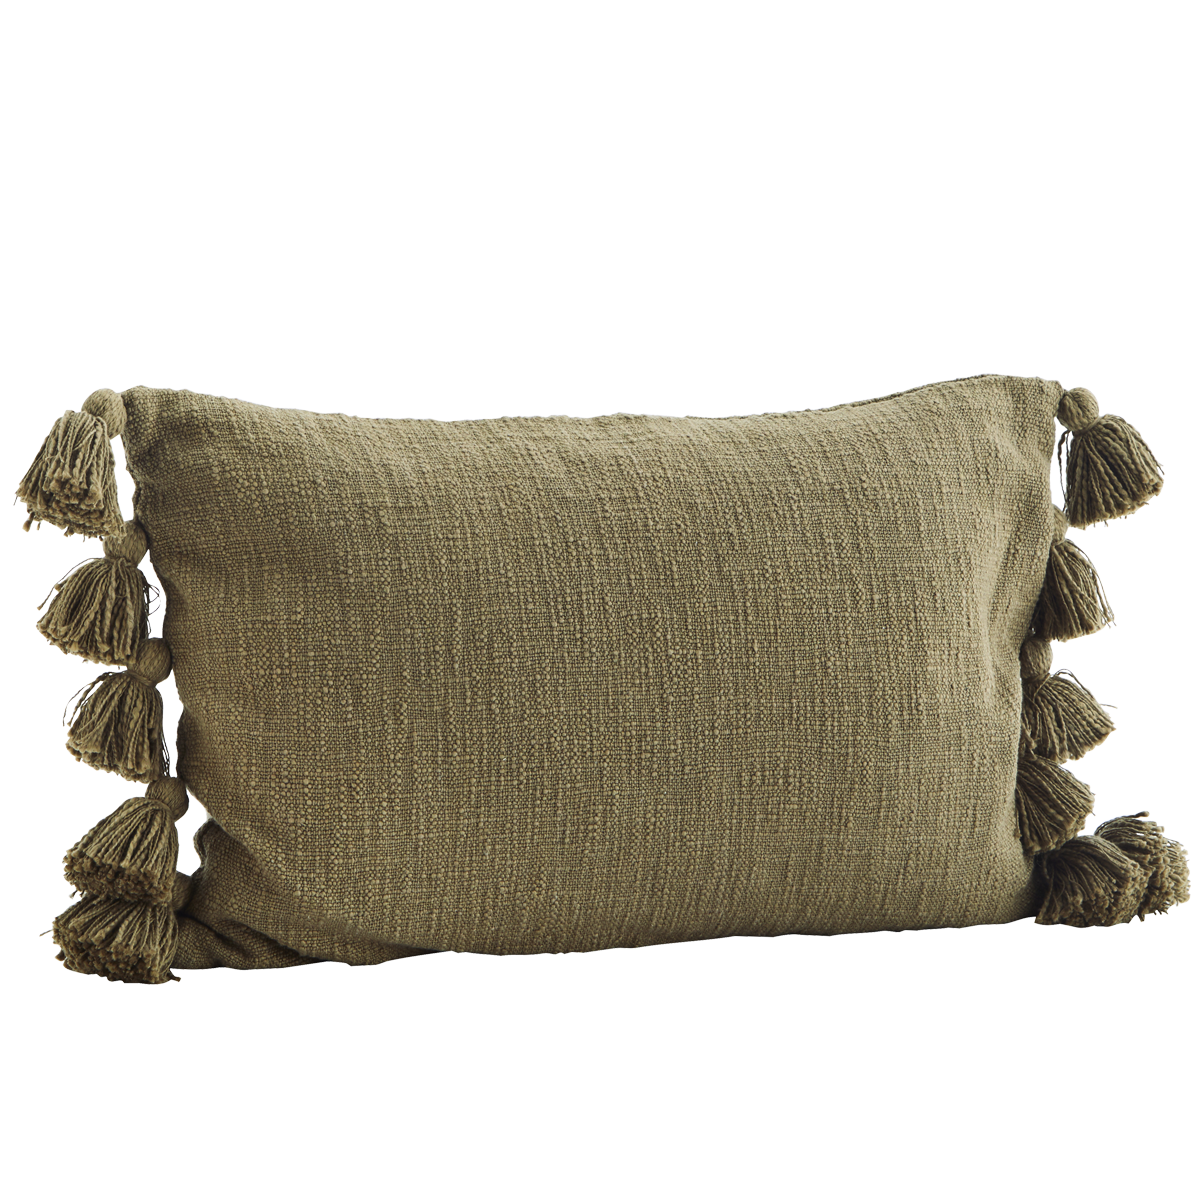 Madam Stoltz Khaki Cushion Cover with Tassels